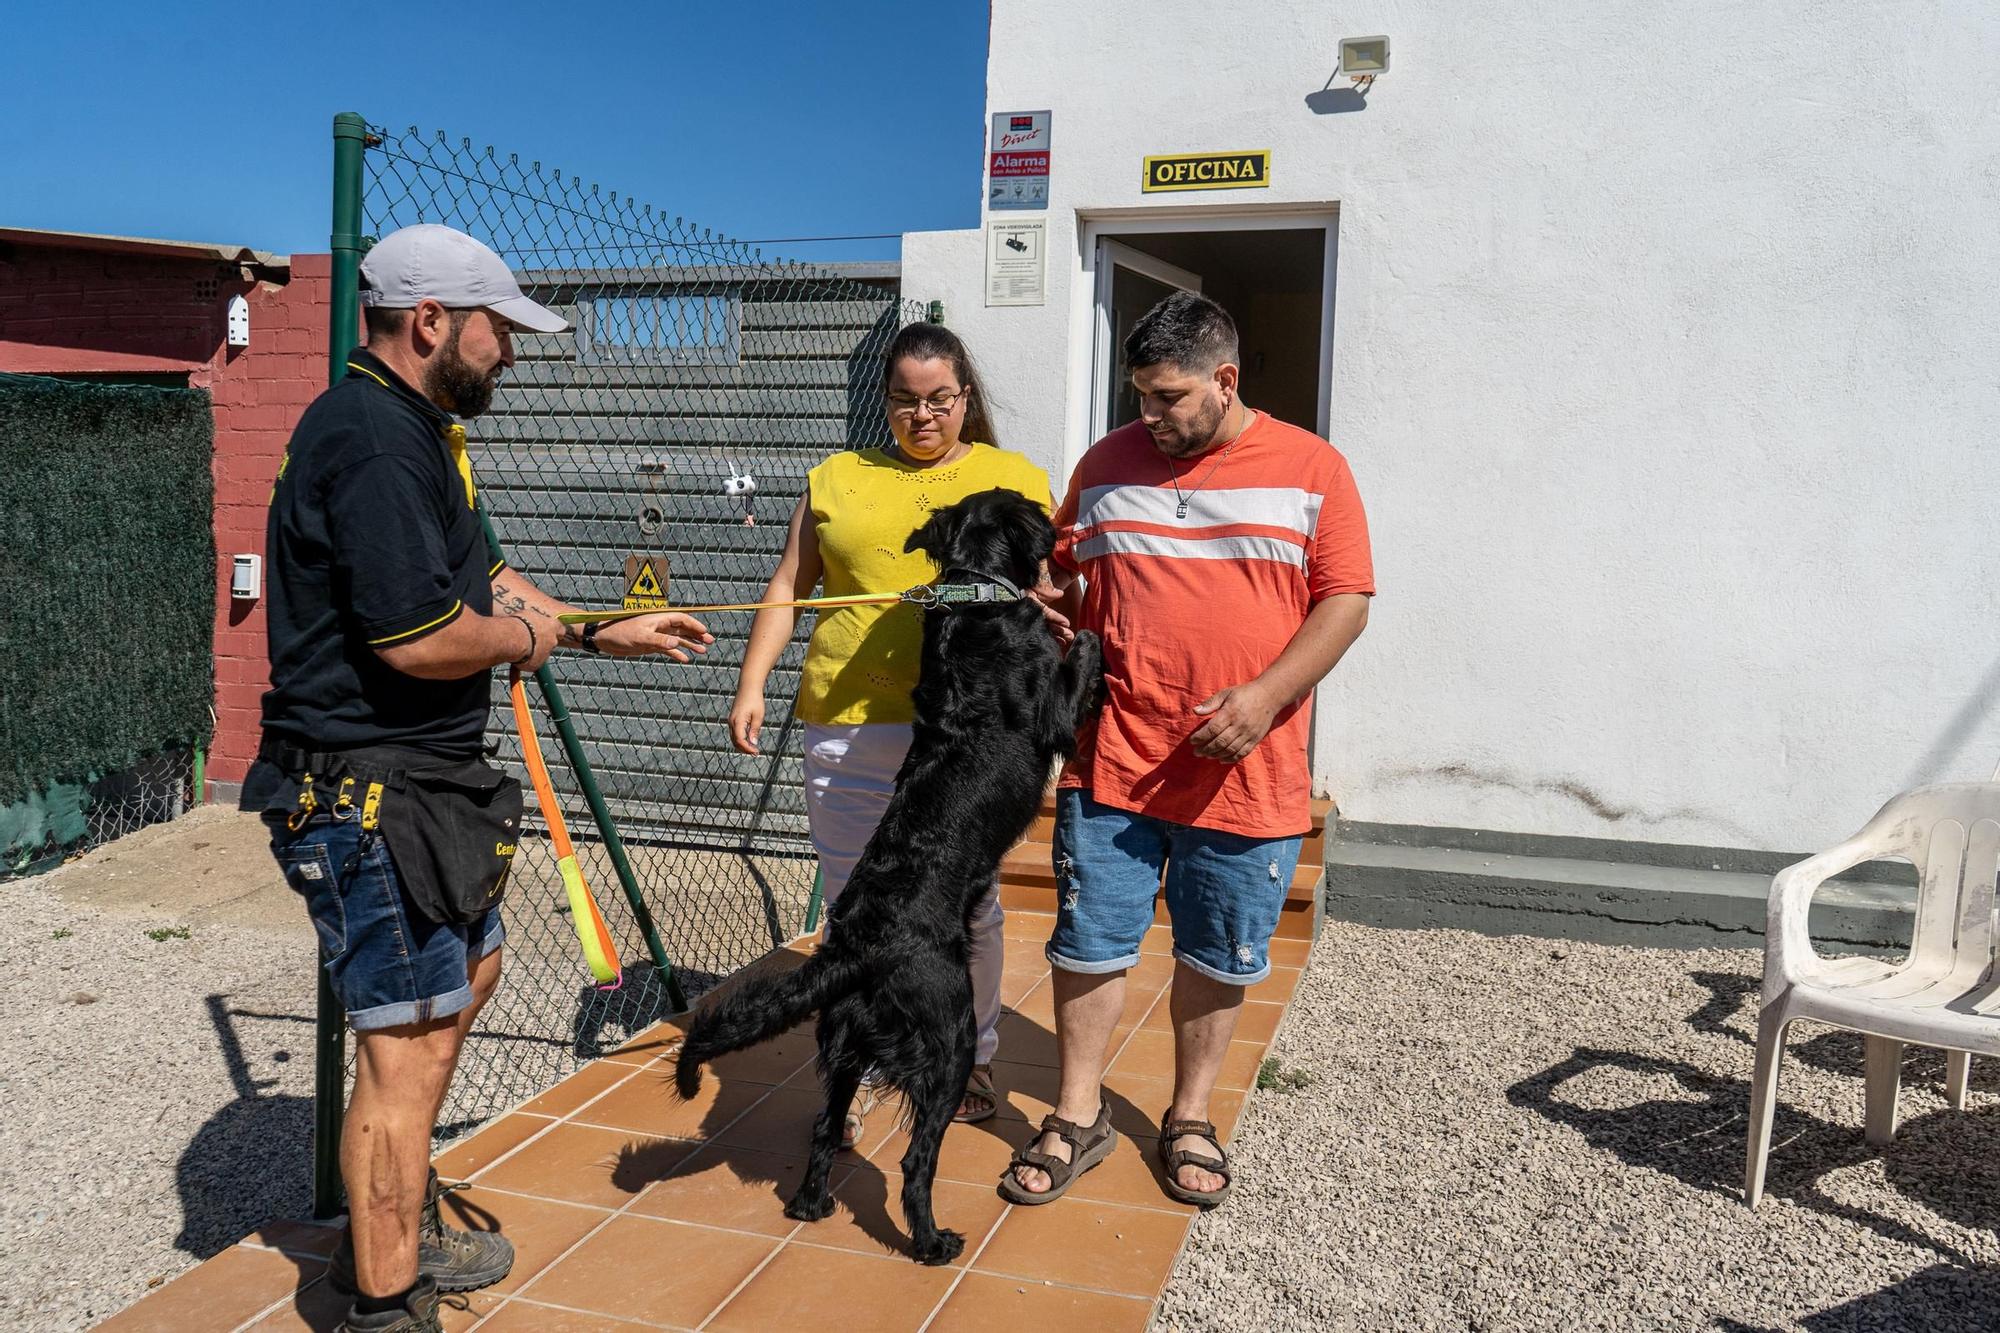 Residències canines: Centre Caní Jonatan Zafra, a Sant Fruitós de Bages